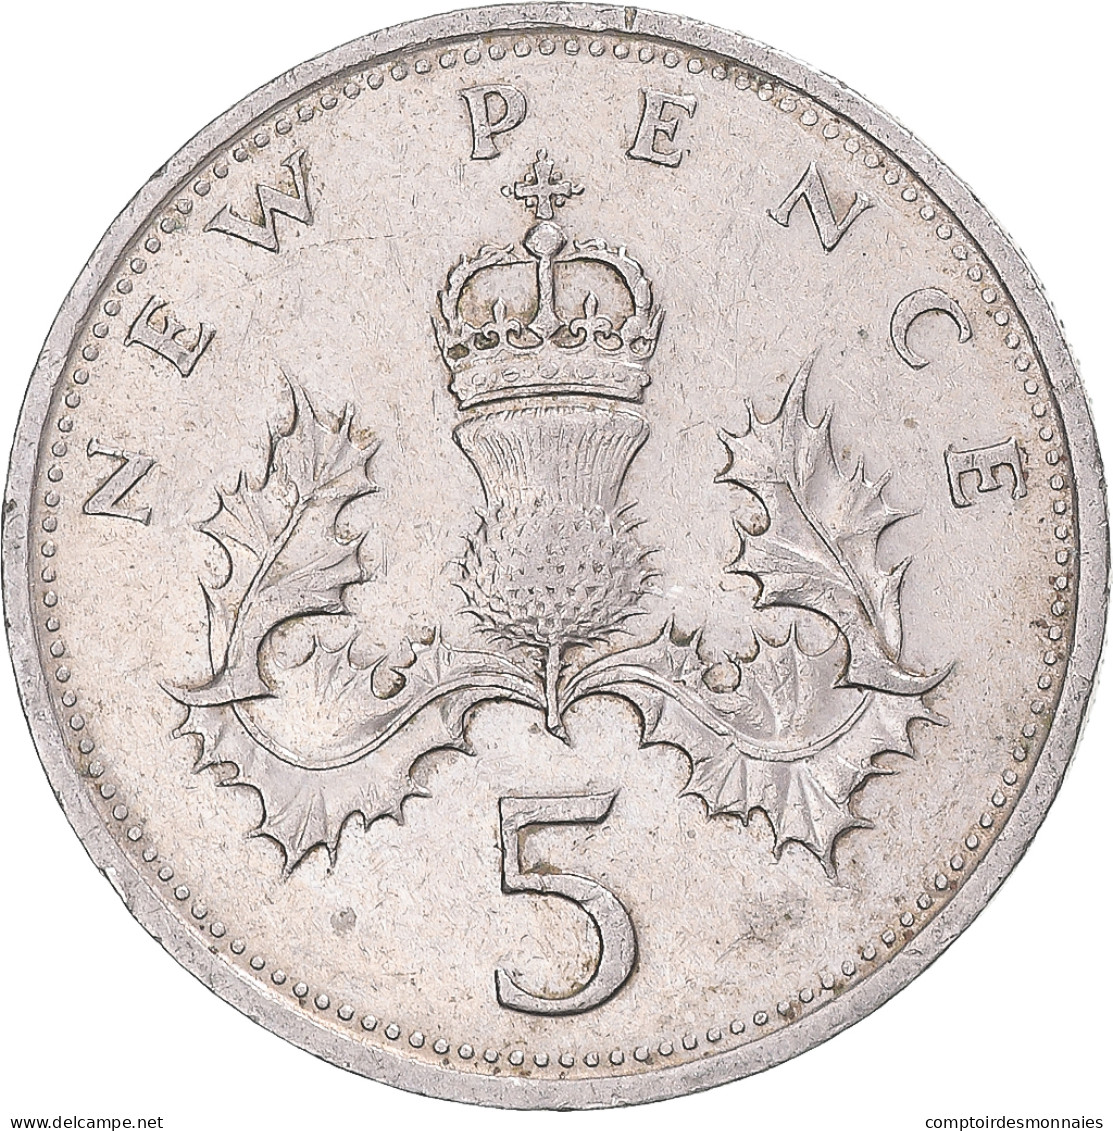 Monnaie, Grande-Bretagne, 5 New Pence, 1979 - 5 Pence & 5 New Pence